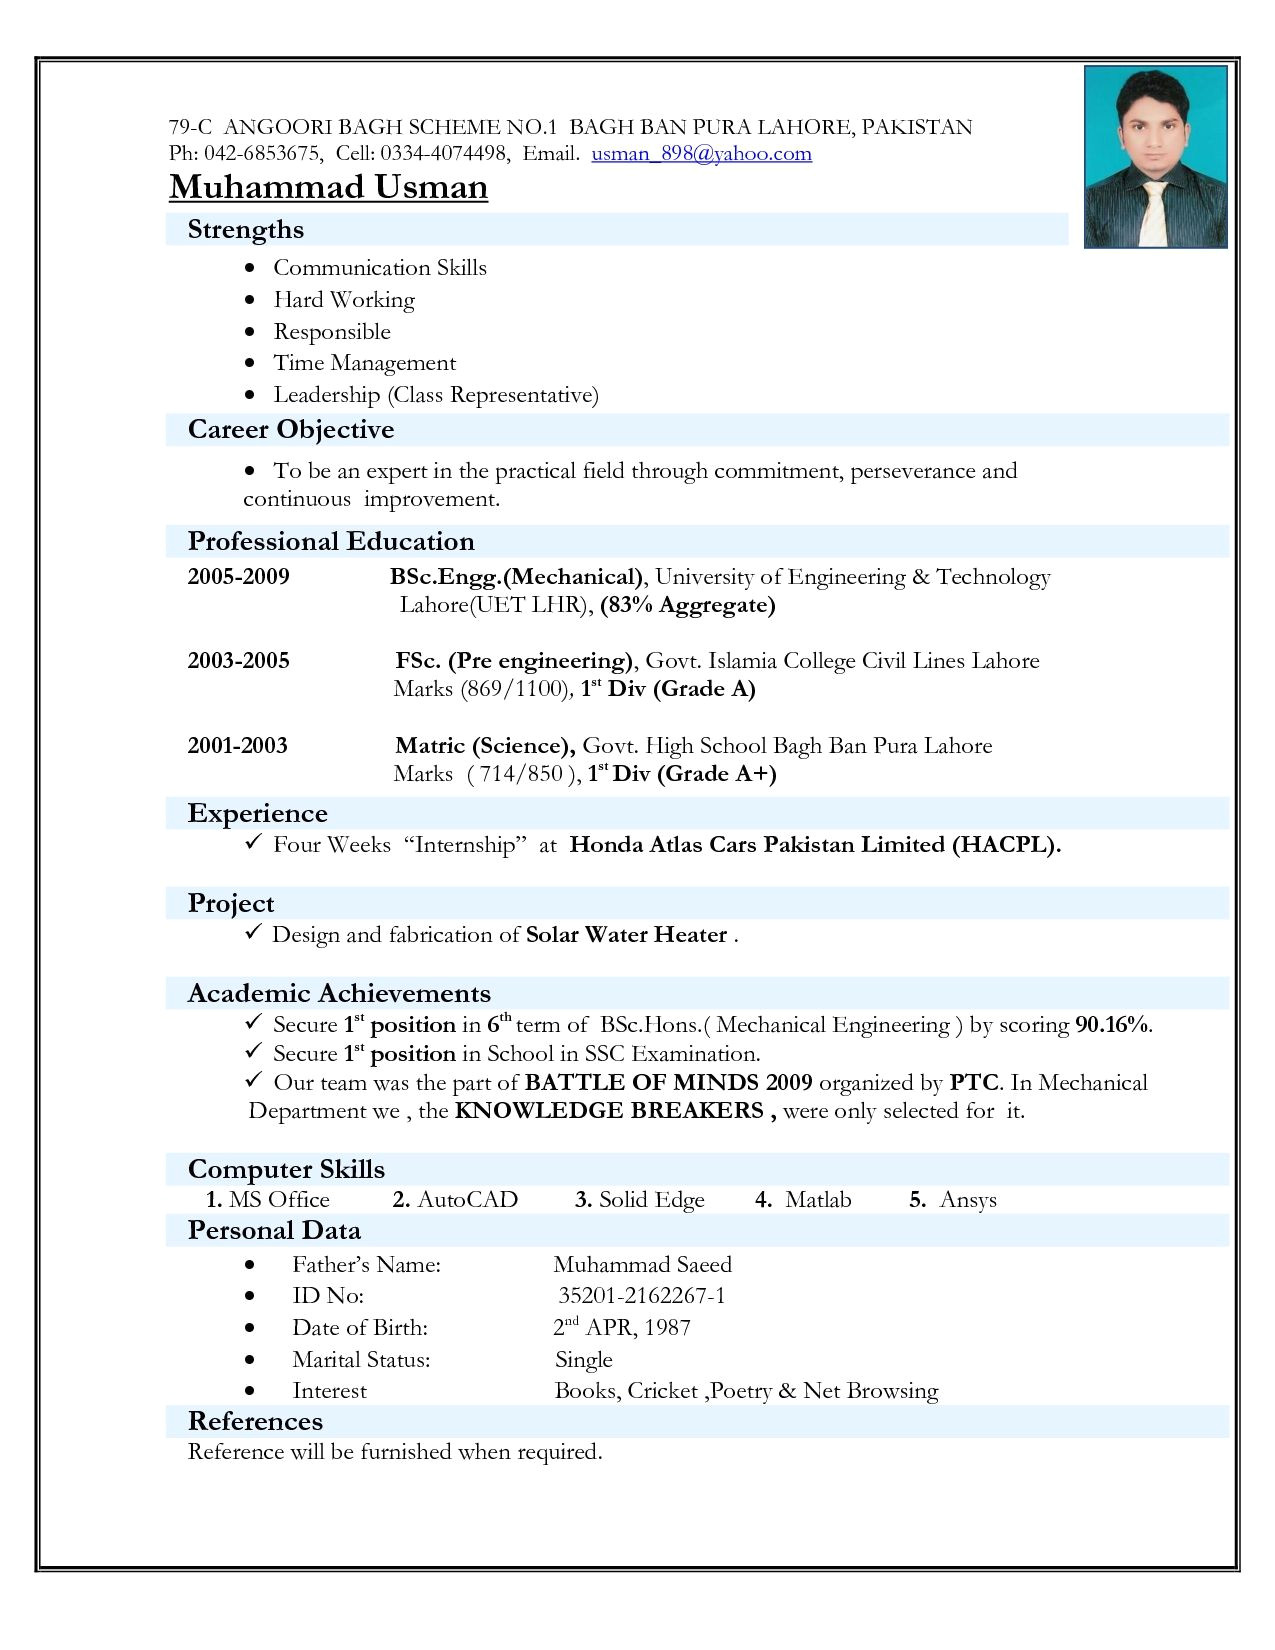 Resume Format For Freshers Diploma Mechanical Engineers Williamson ga us